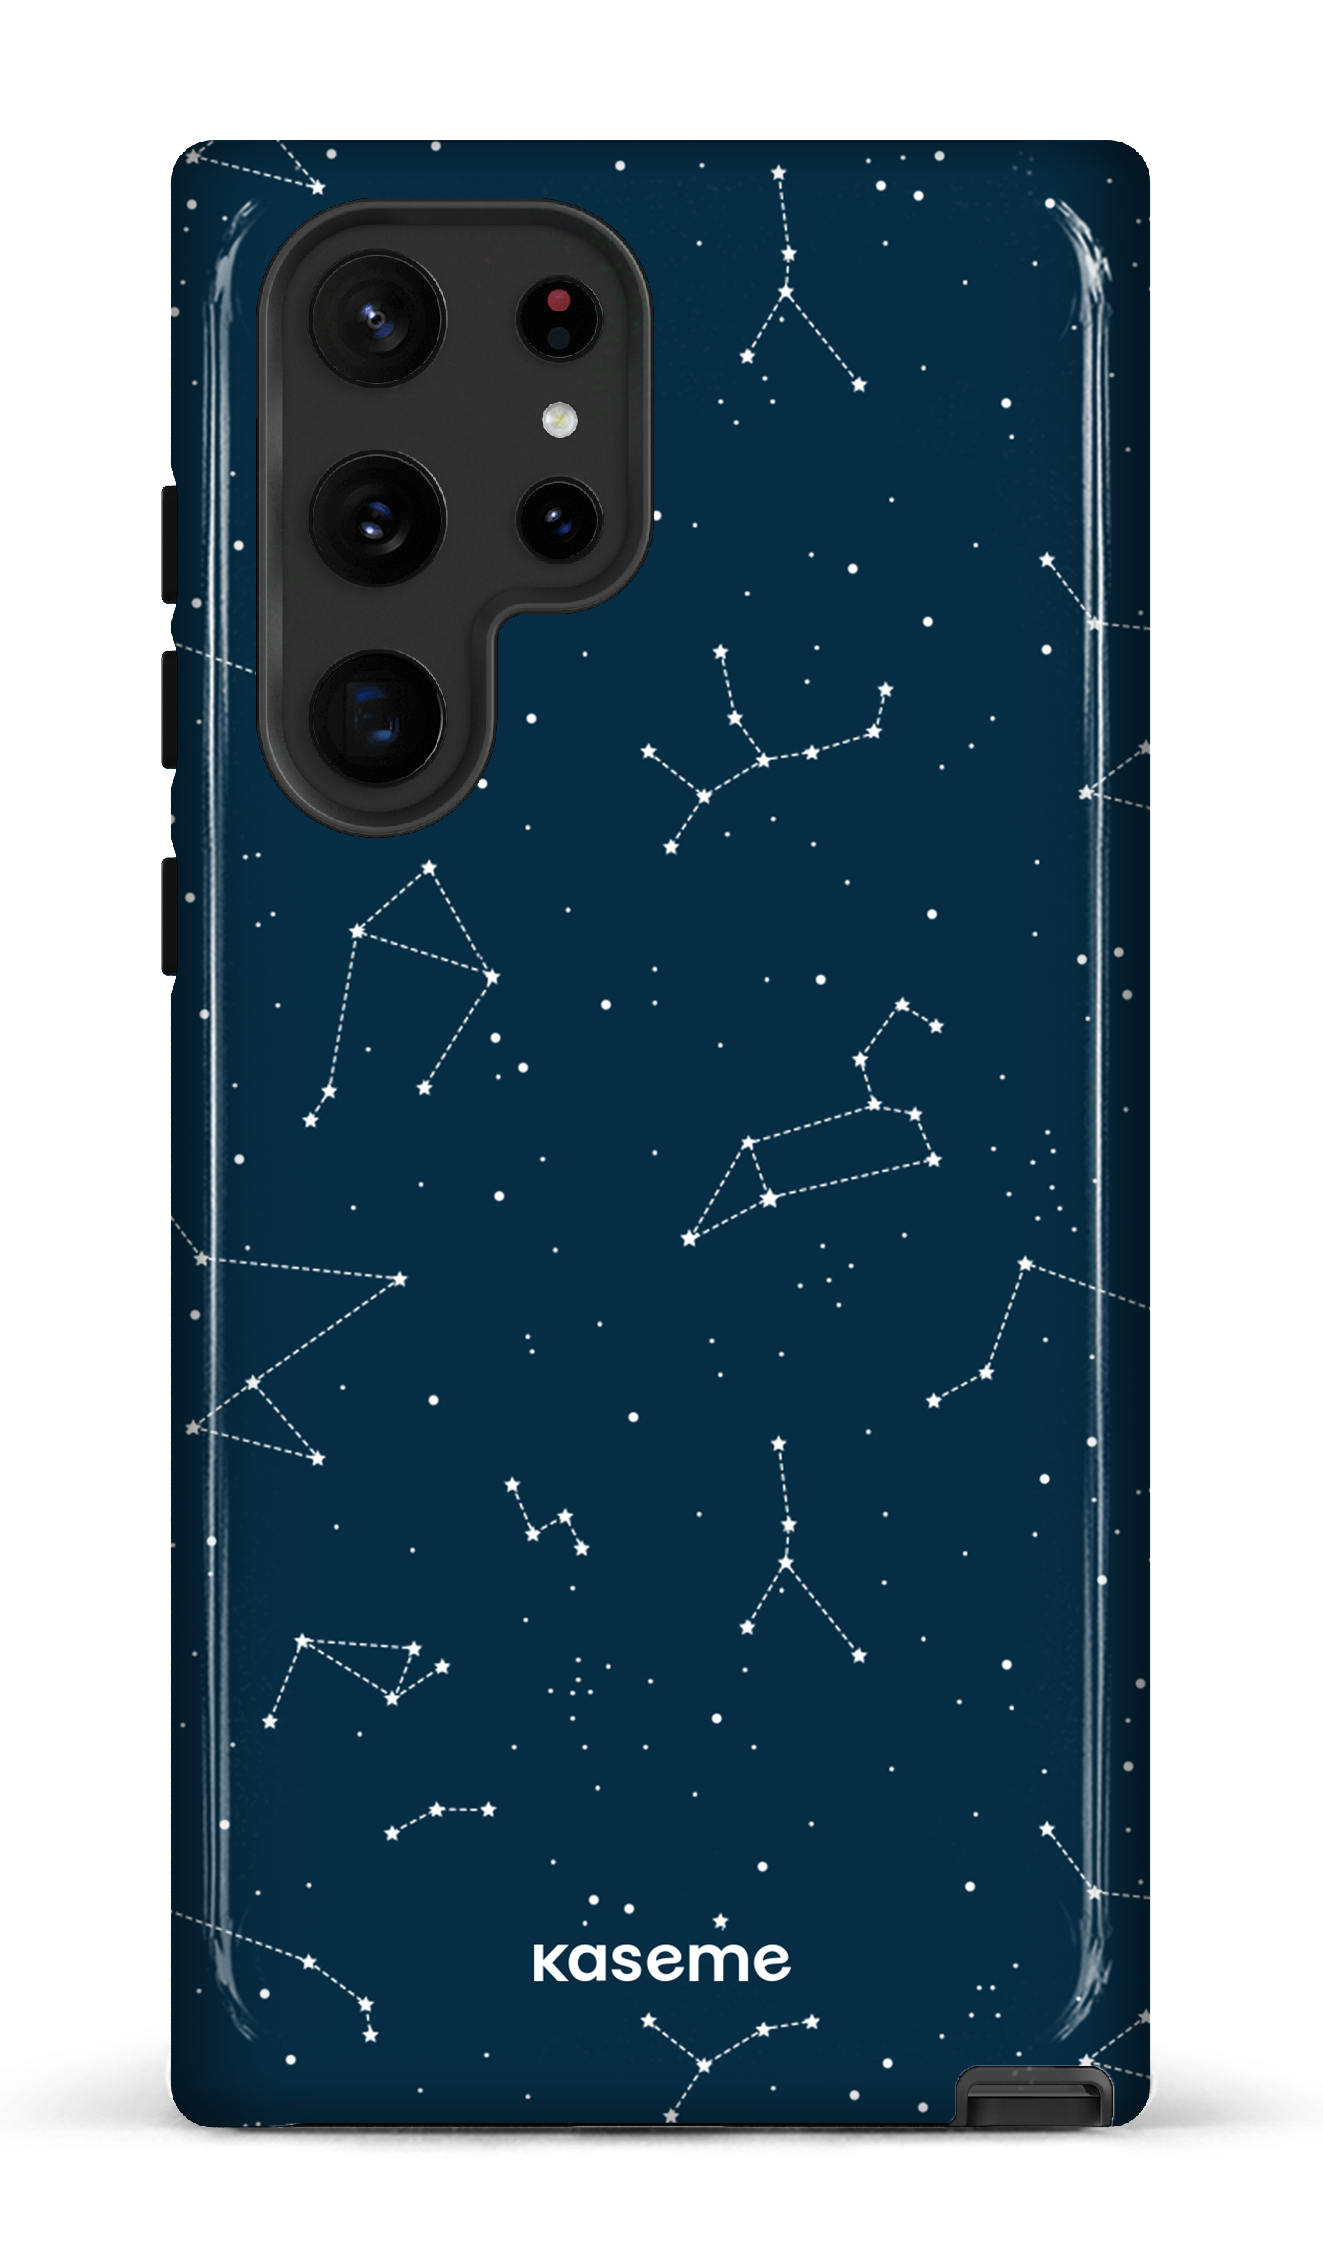 Cosmos - Galaxy S22 Ultra